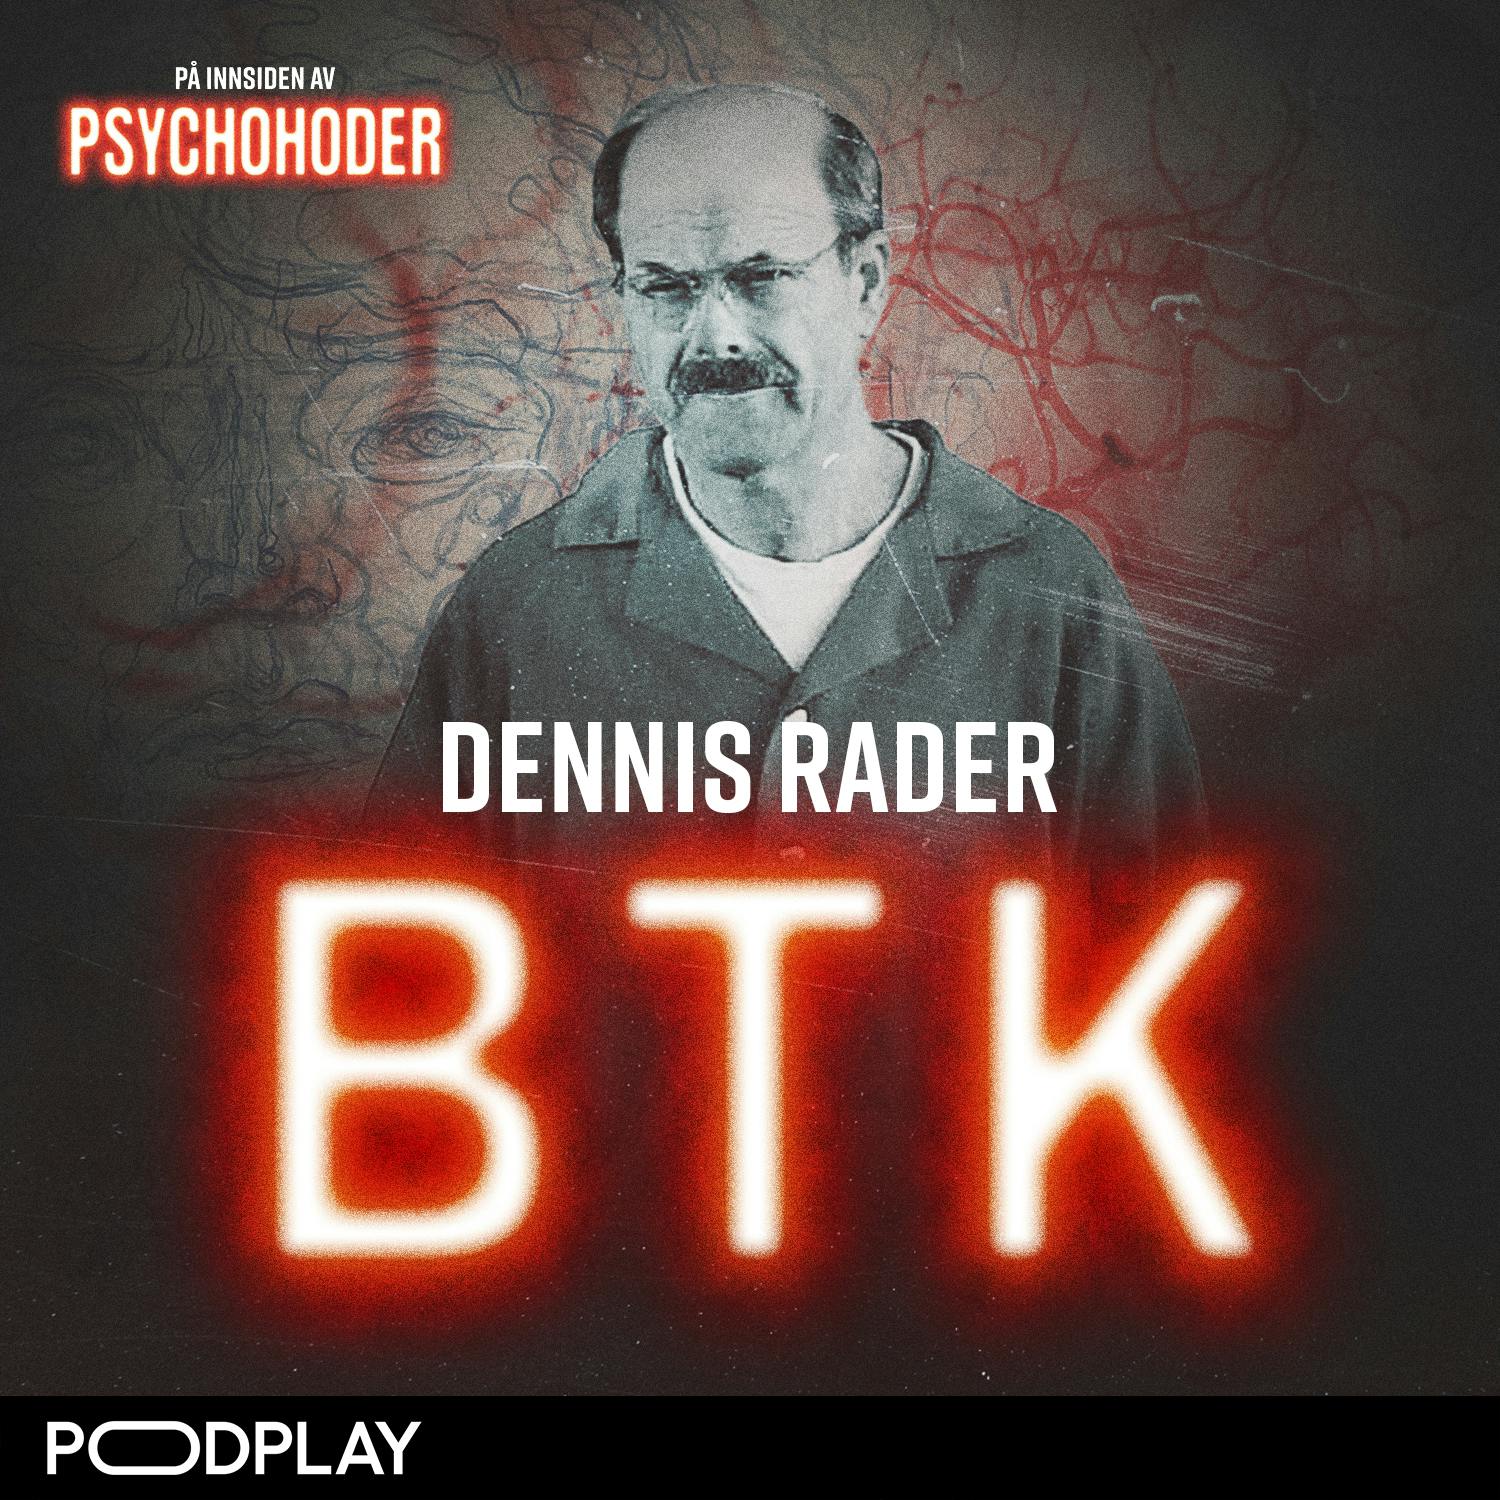 Dennis Rader – “Bind them, Torture them, Kill them” = BTK